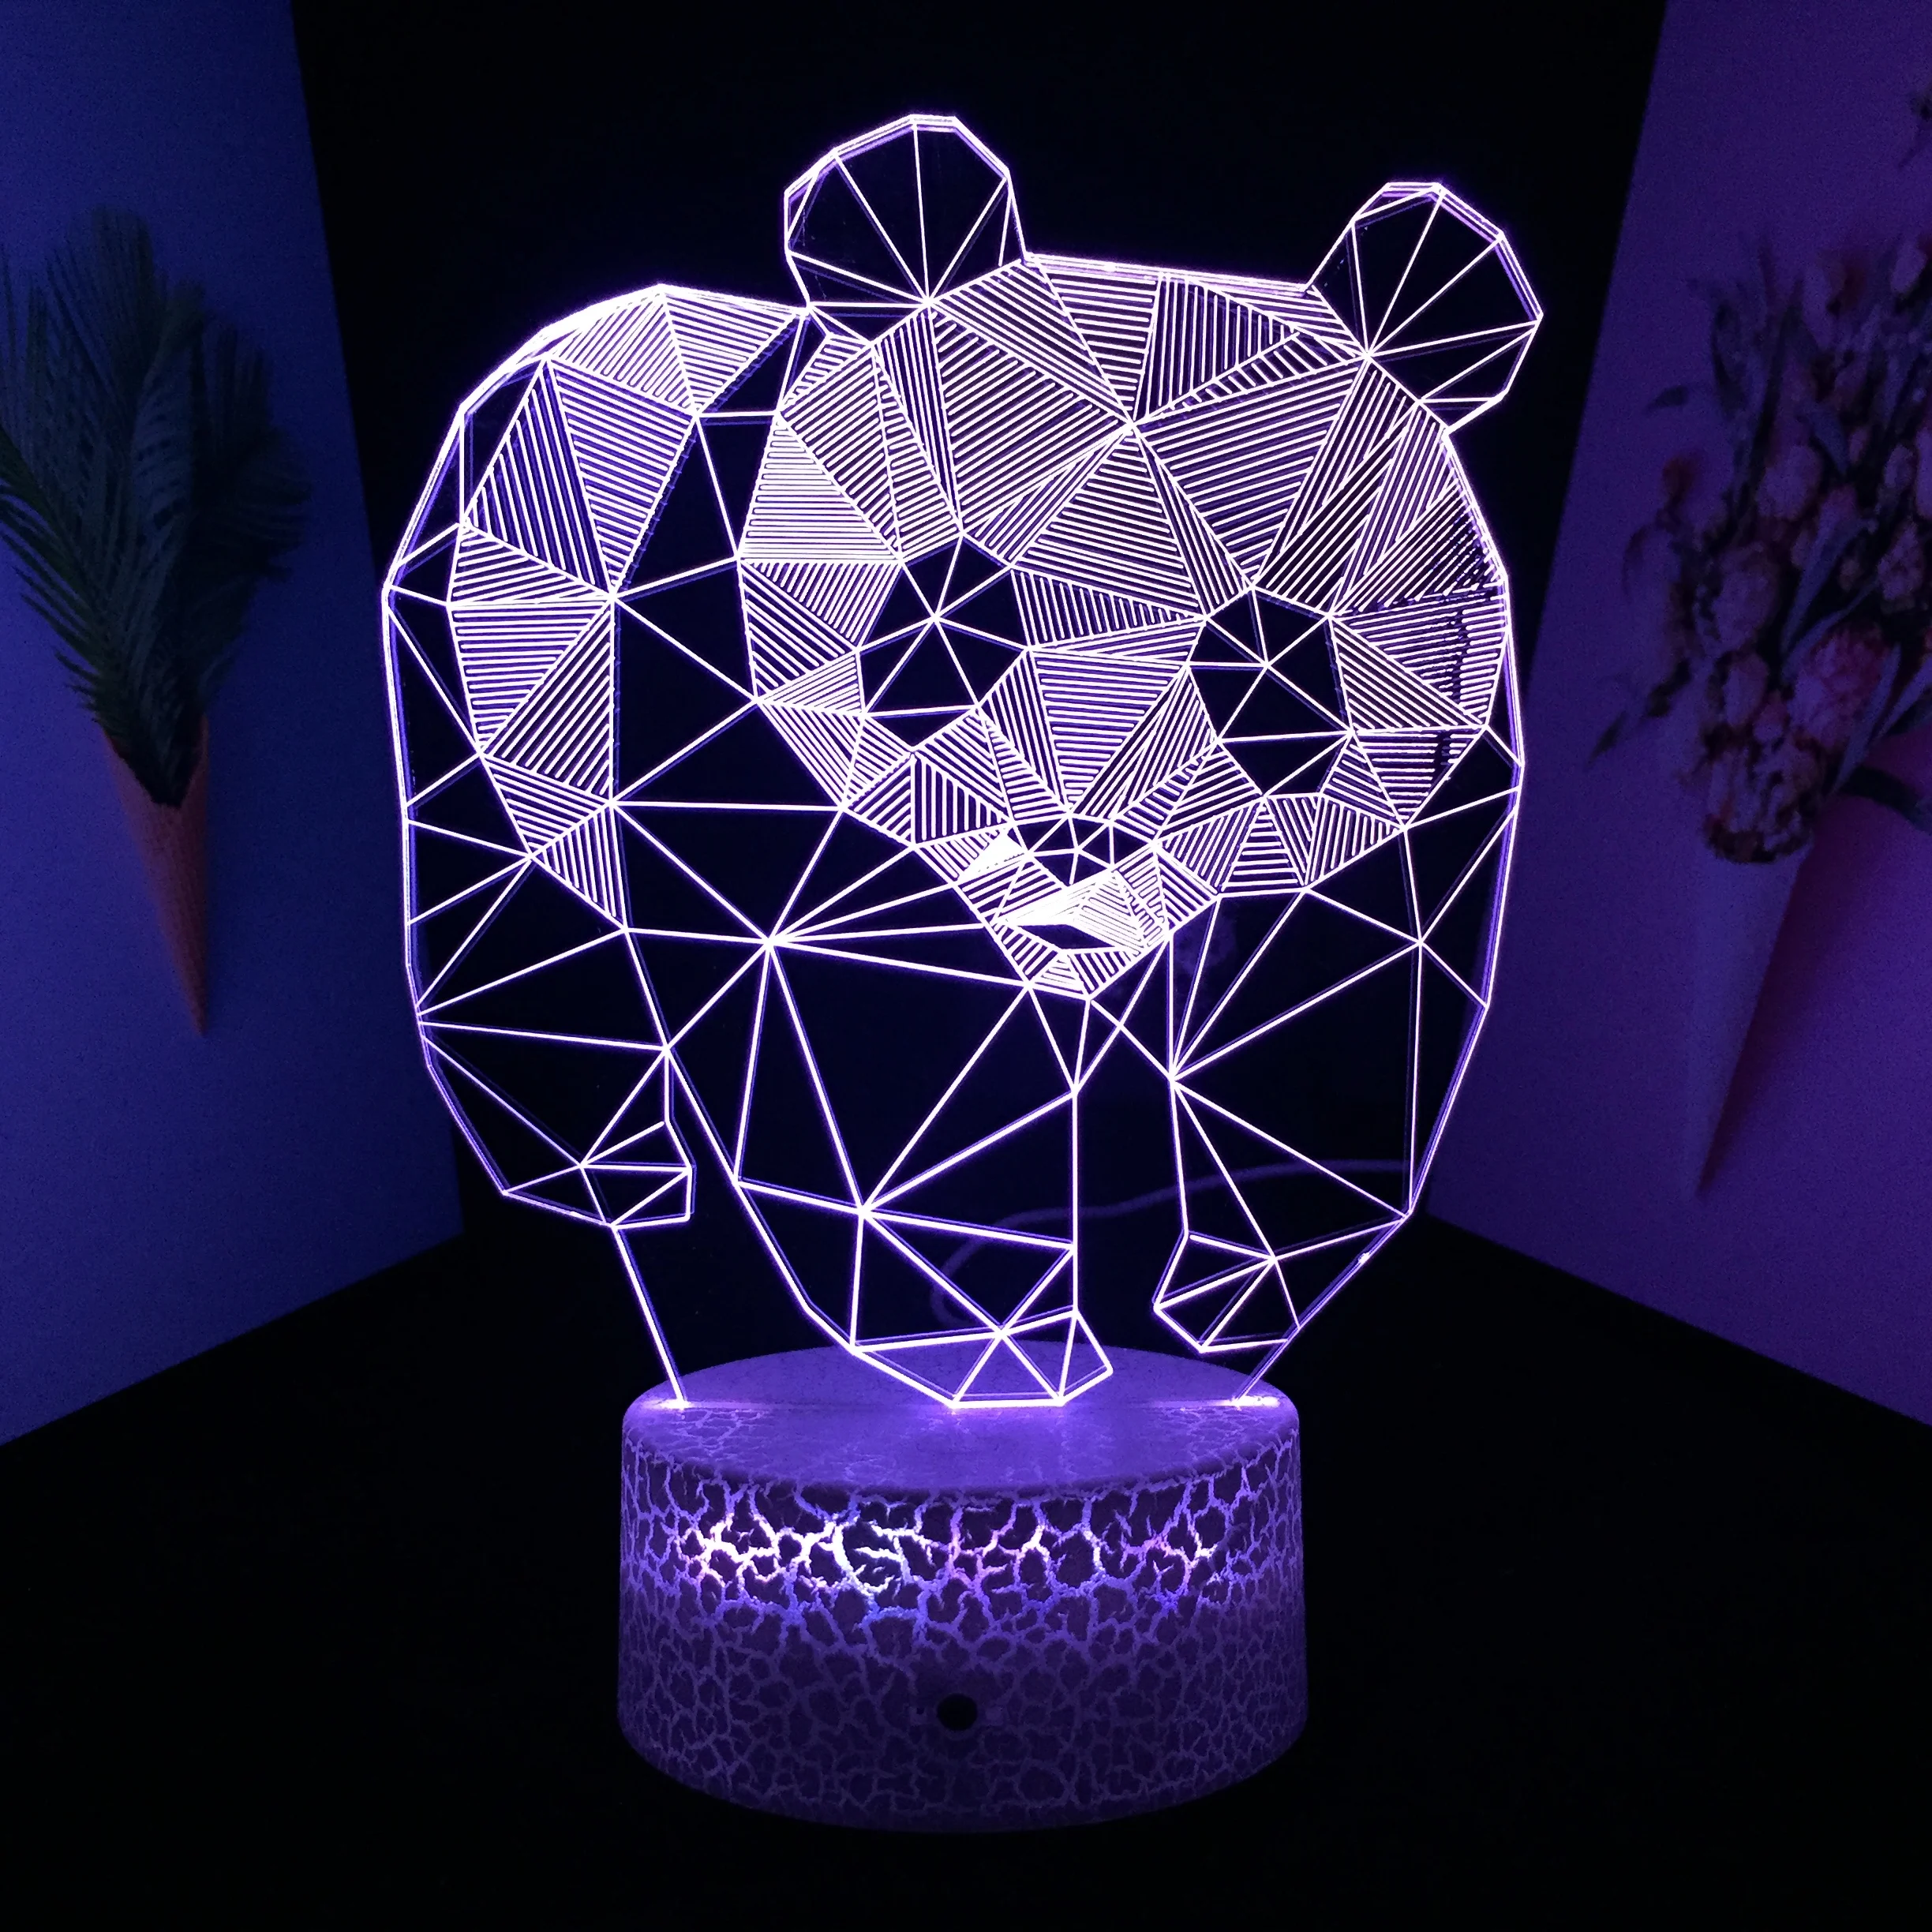 Panda Light Animal 3D Illusion Table Lamp for Kids Bedroom Decoration Nightlight LED RGB Touch Sensor Night Light  Dropshipping